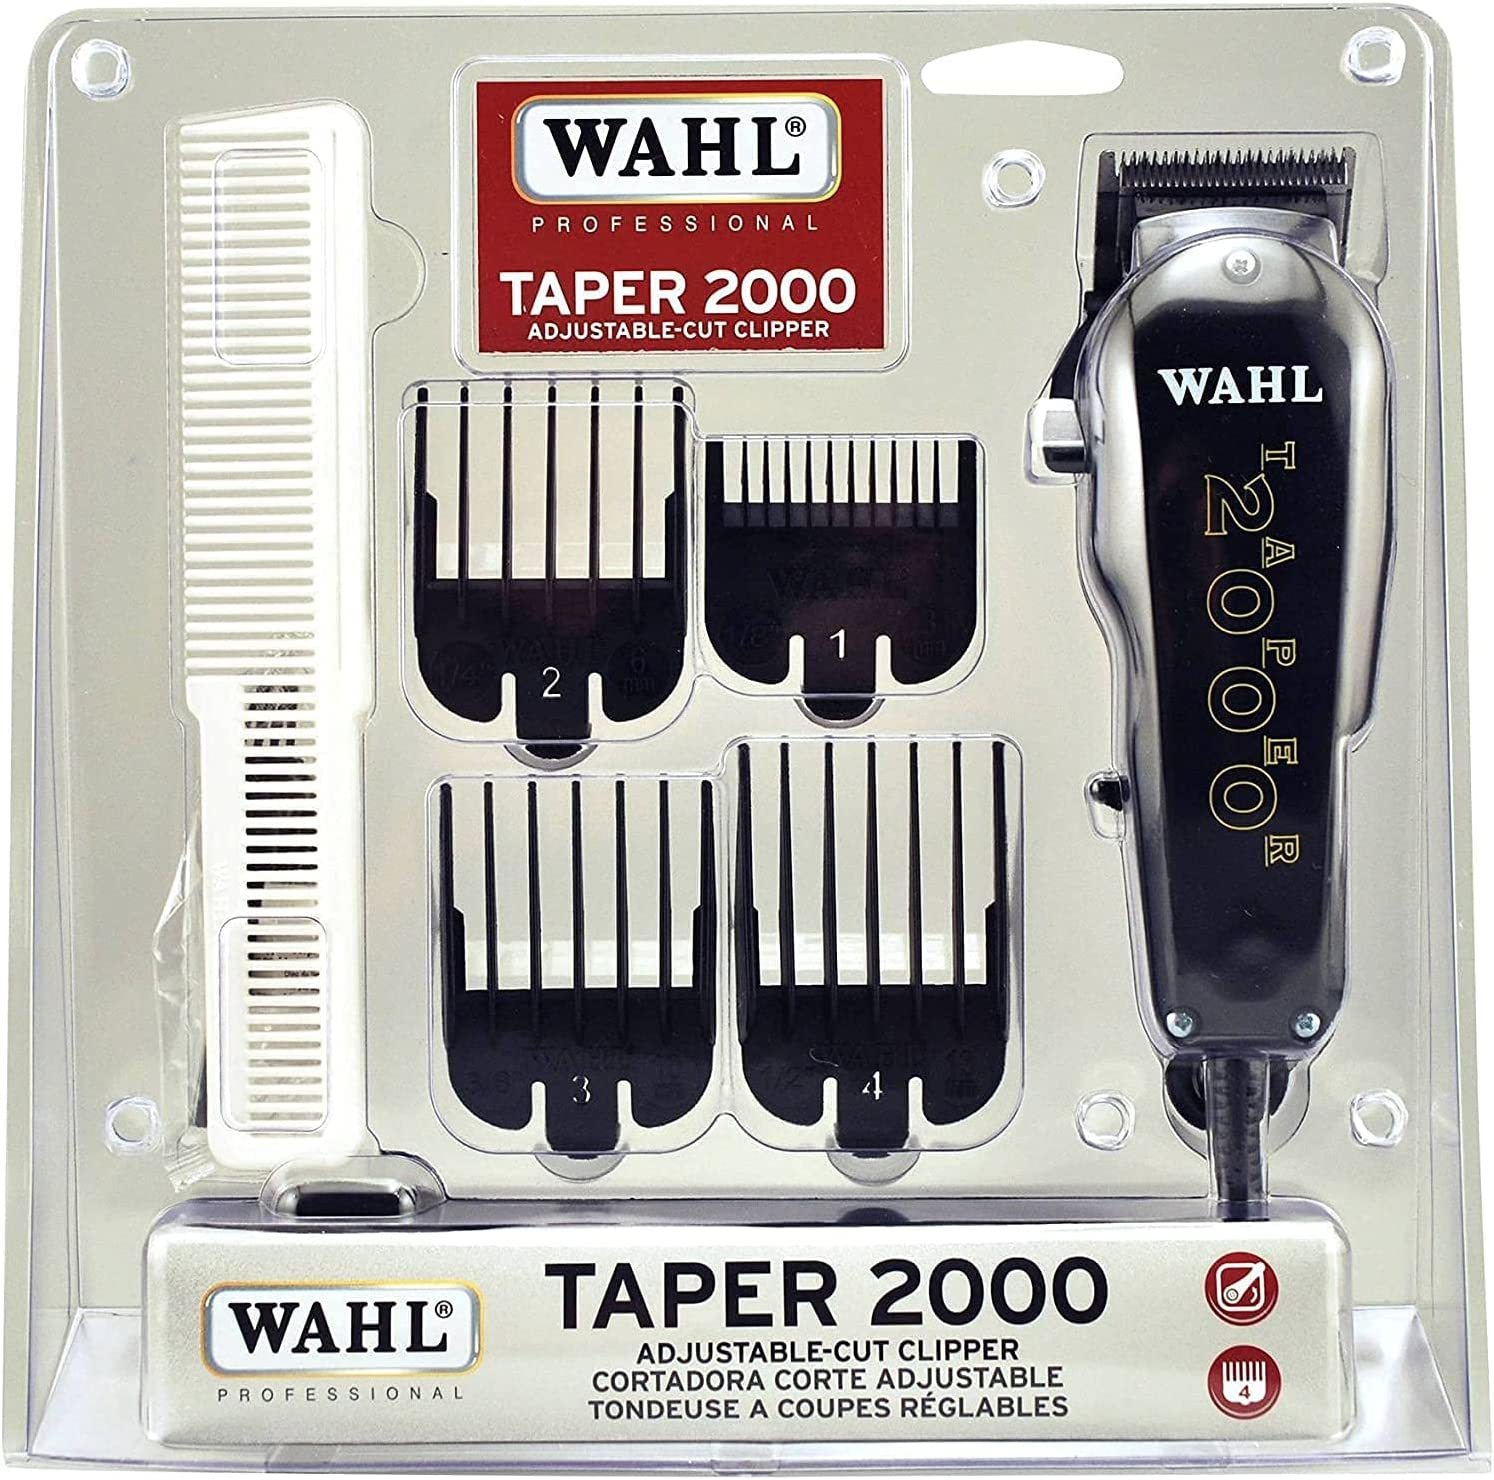 Wahl Professional Taper 2000 Adjustable Cut Clipper #8472-700 – Assorted Color - $66.99